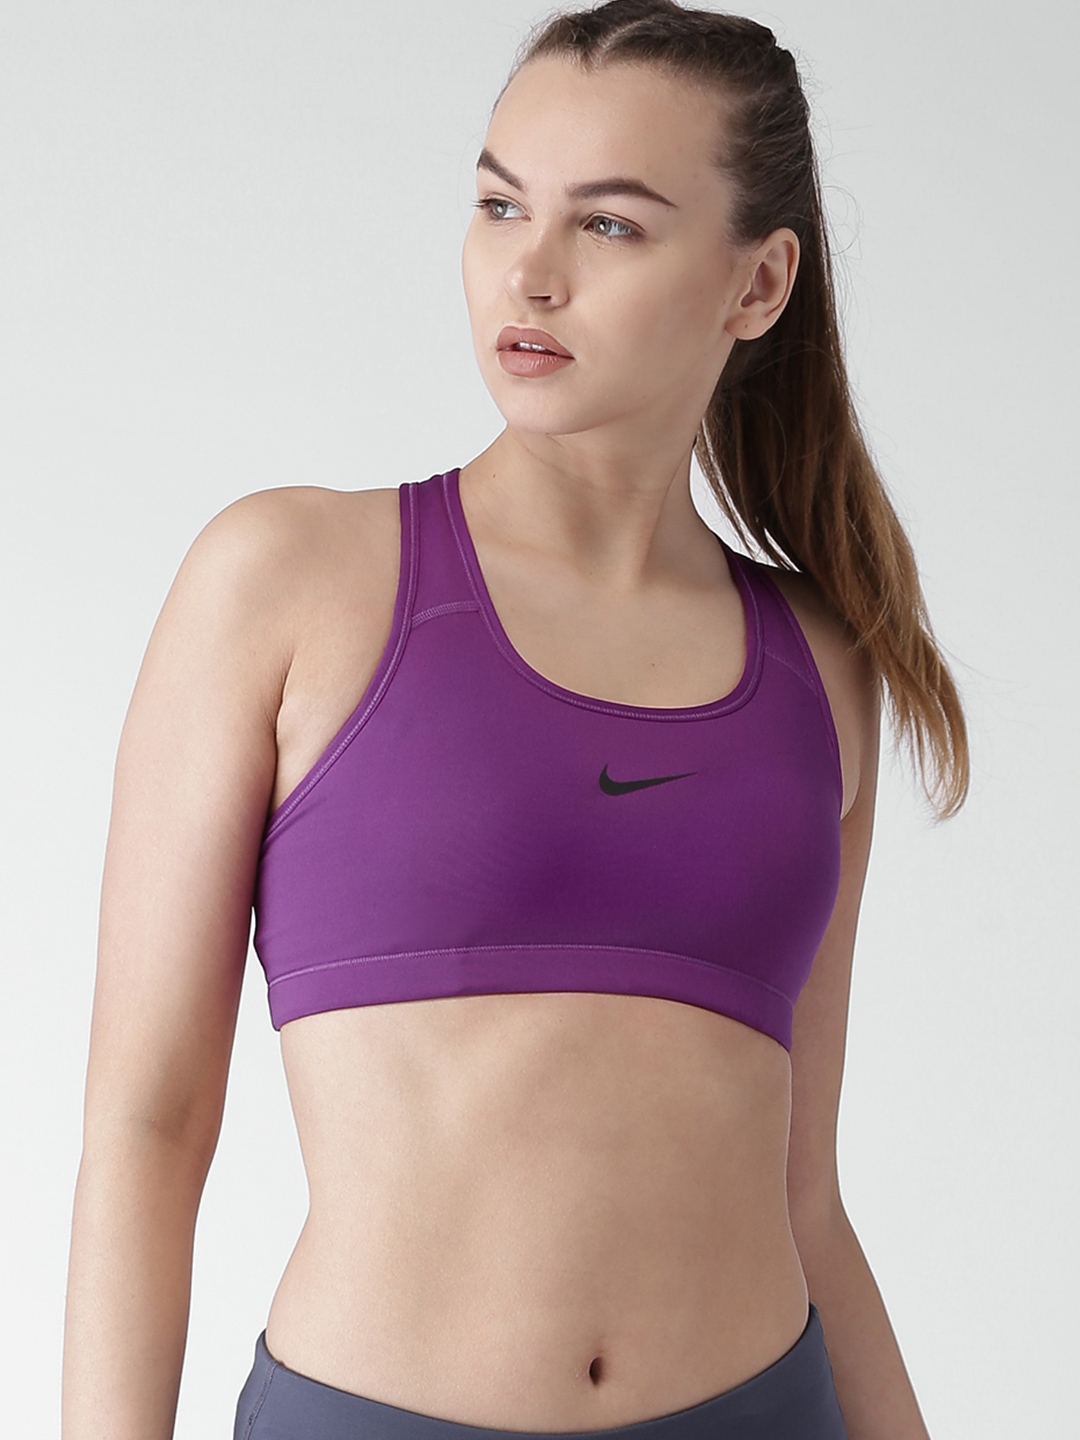 Purple Nike sports bra, size medium (grey inserts - Depop